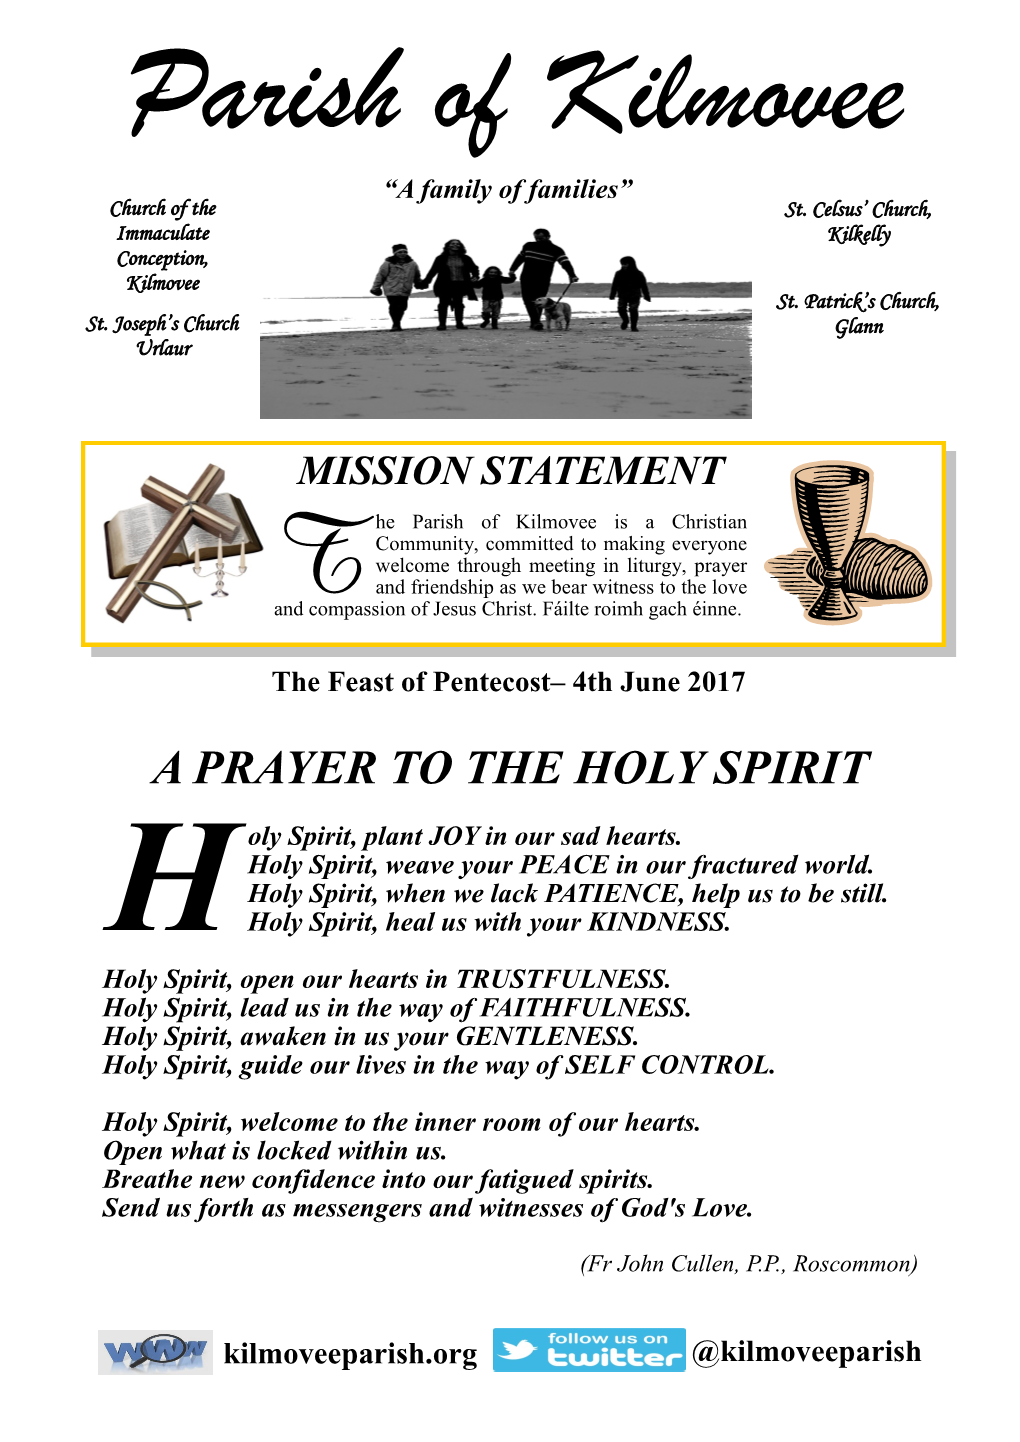 A Prayer to the Holy Spirit